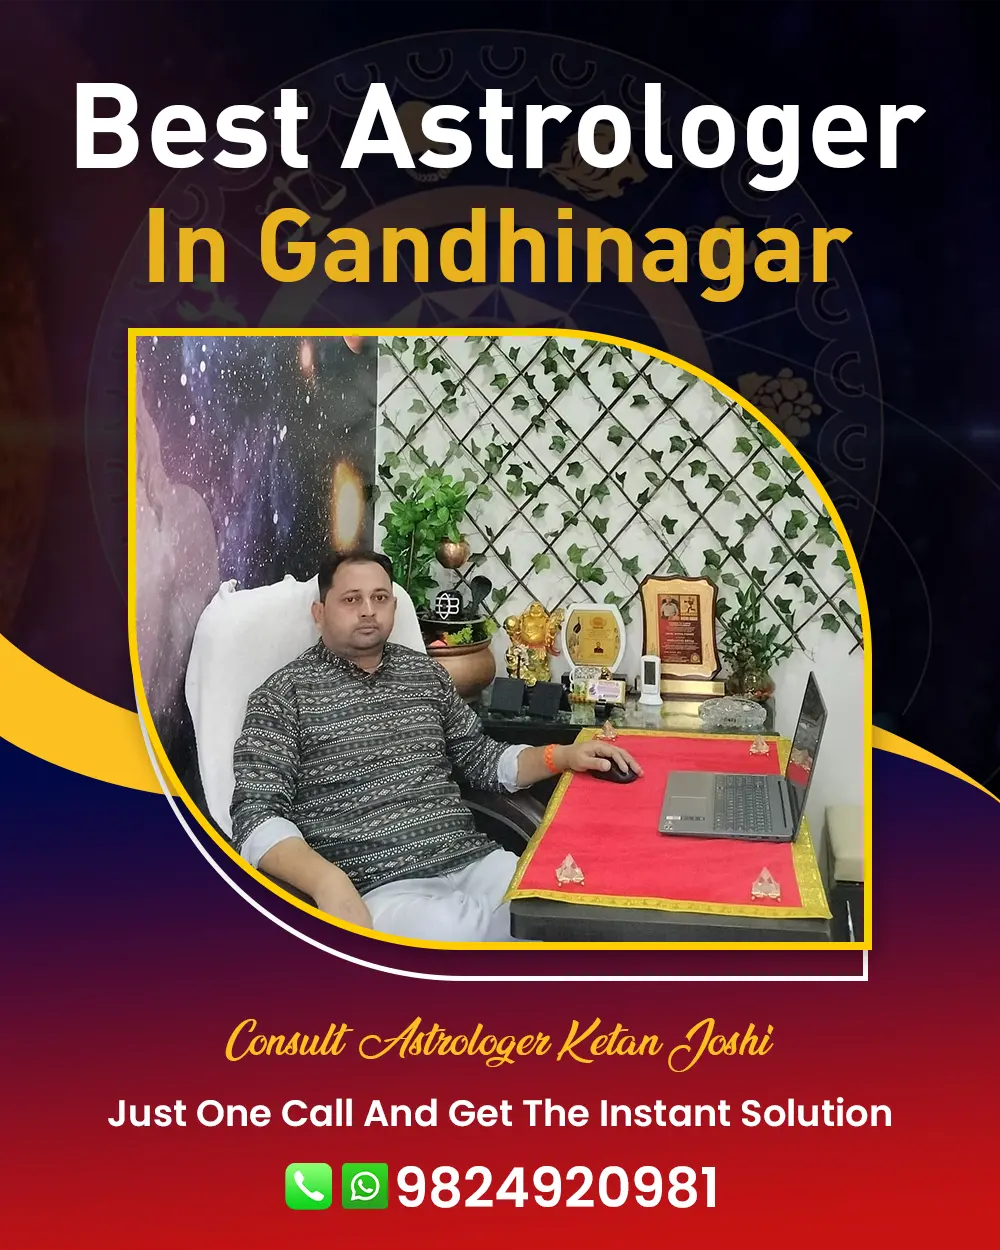 Best Astrologer In Gandhinagar